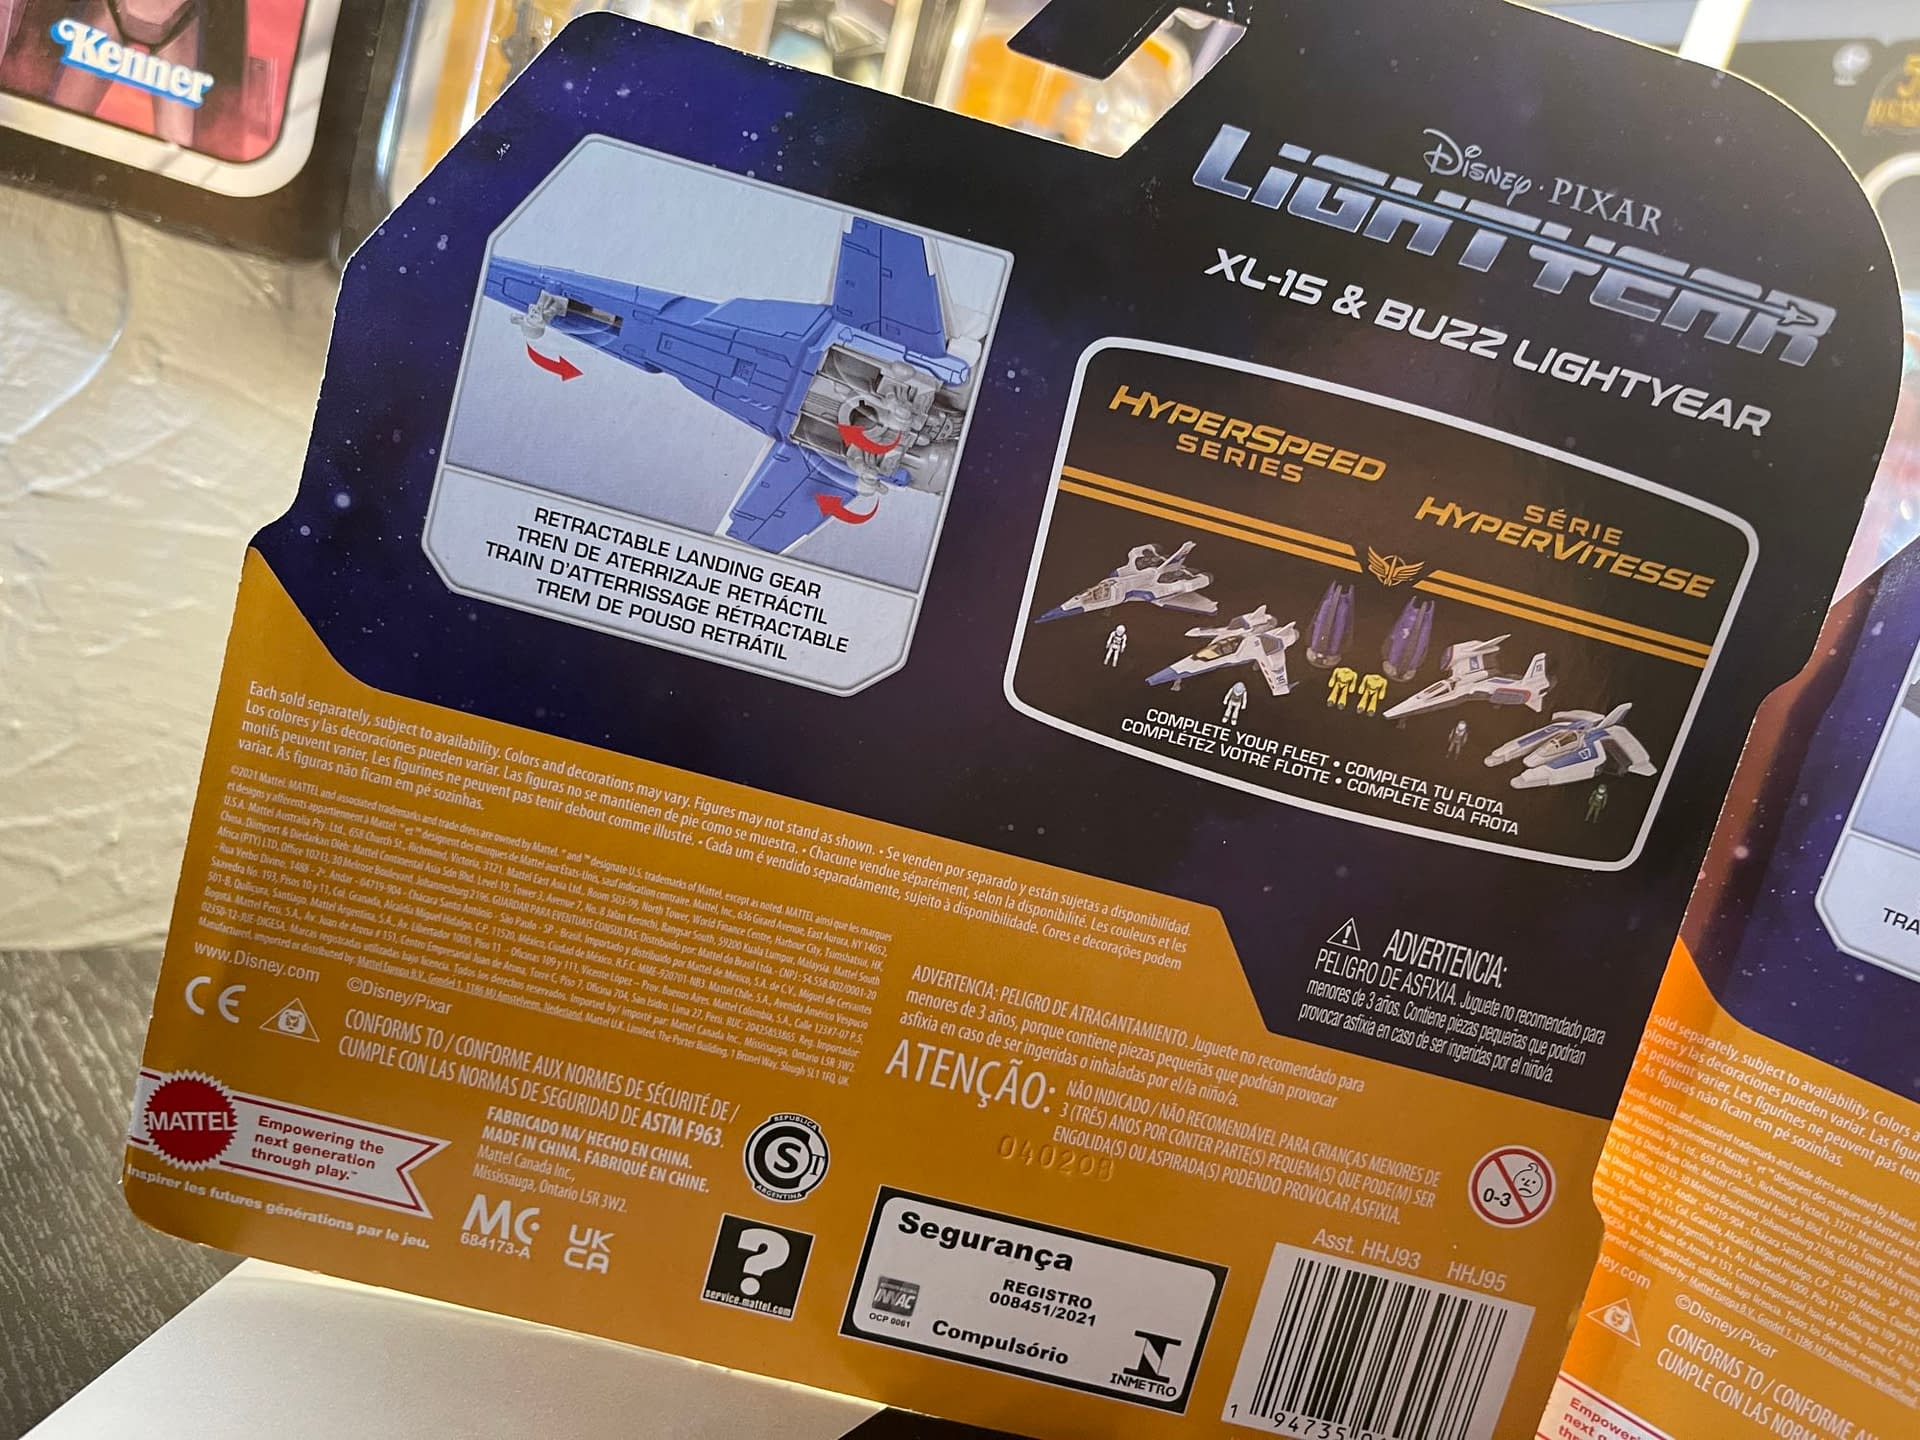 Mattel's Lightyear Hyperspeed Series is Pure Collectible Joy 